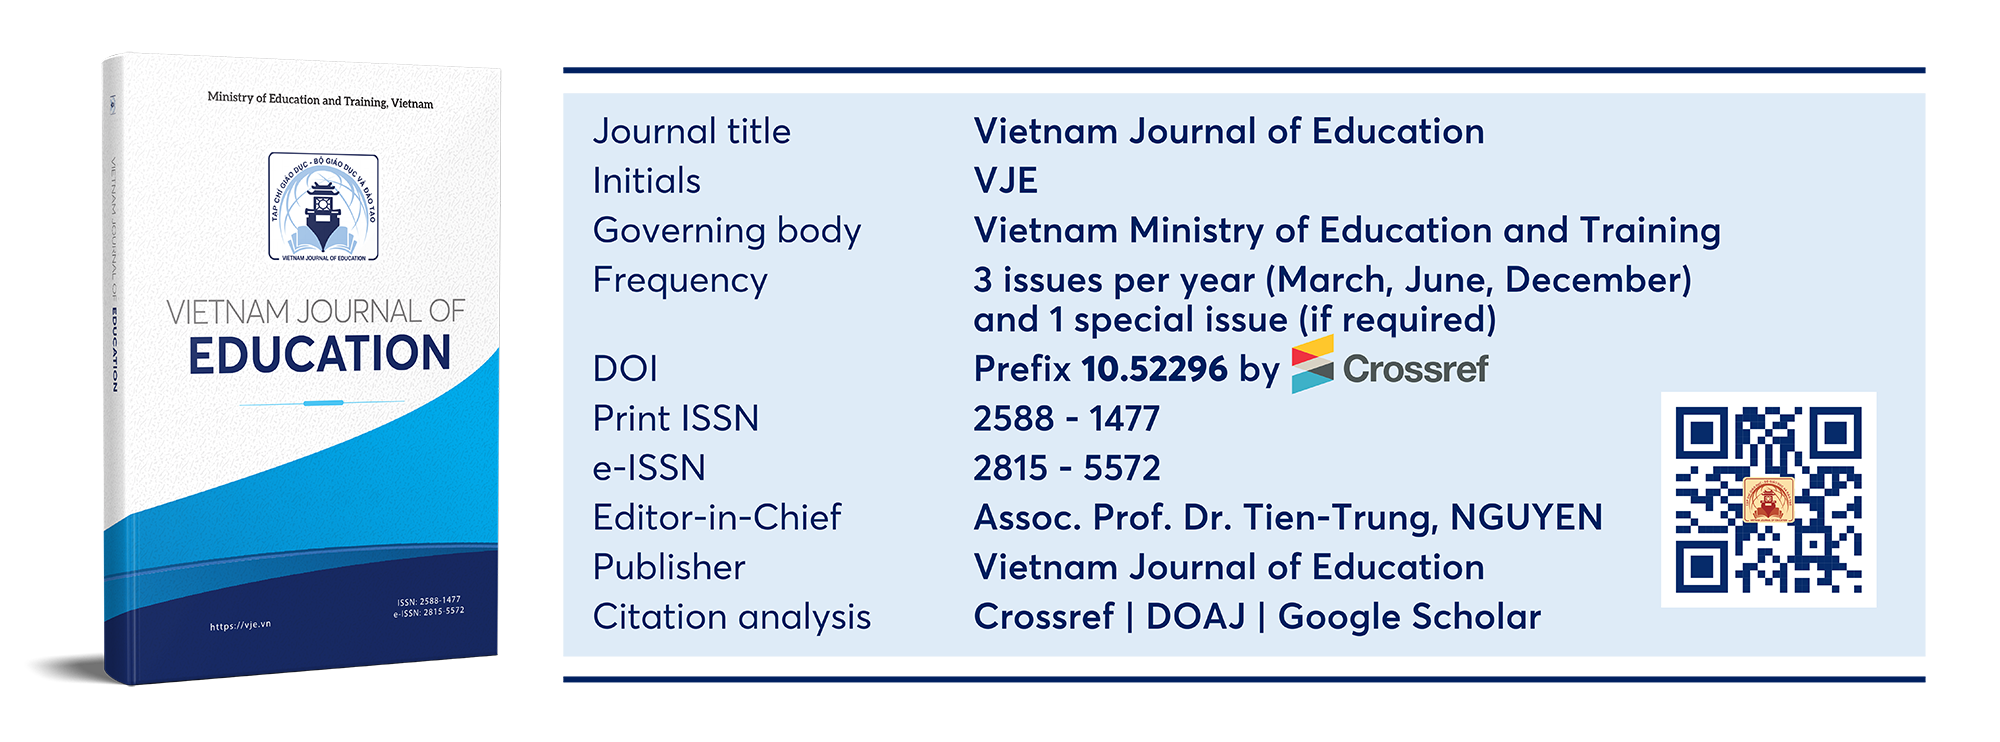 Vietnam Journal of Education